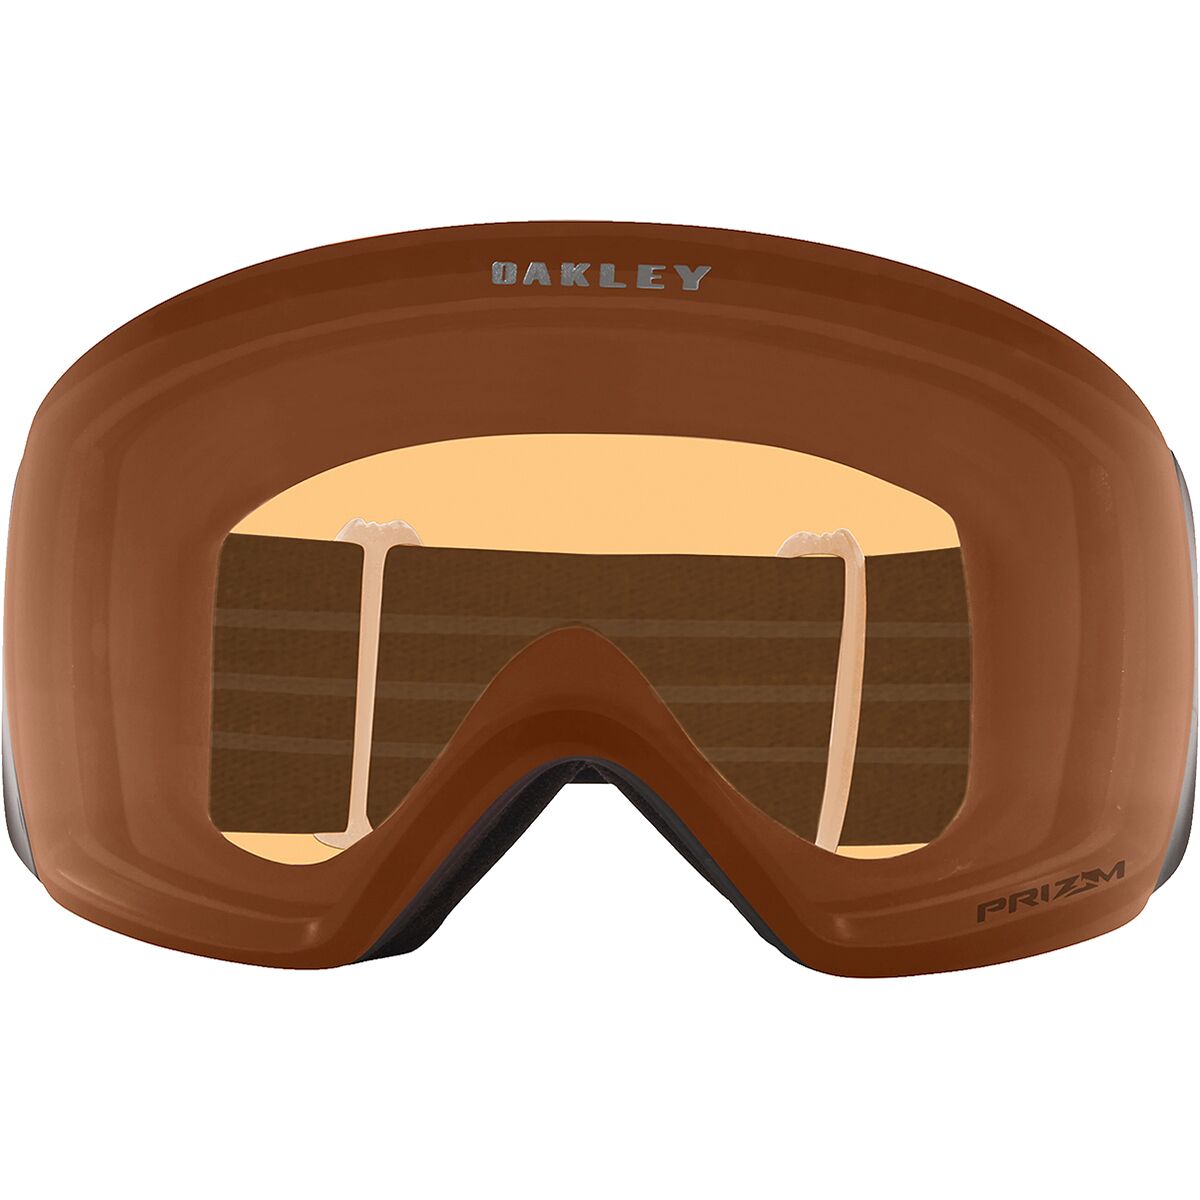 Oakley Flight Deck L Prizm Goggles - Ski